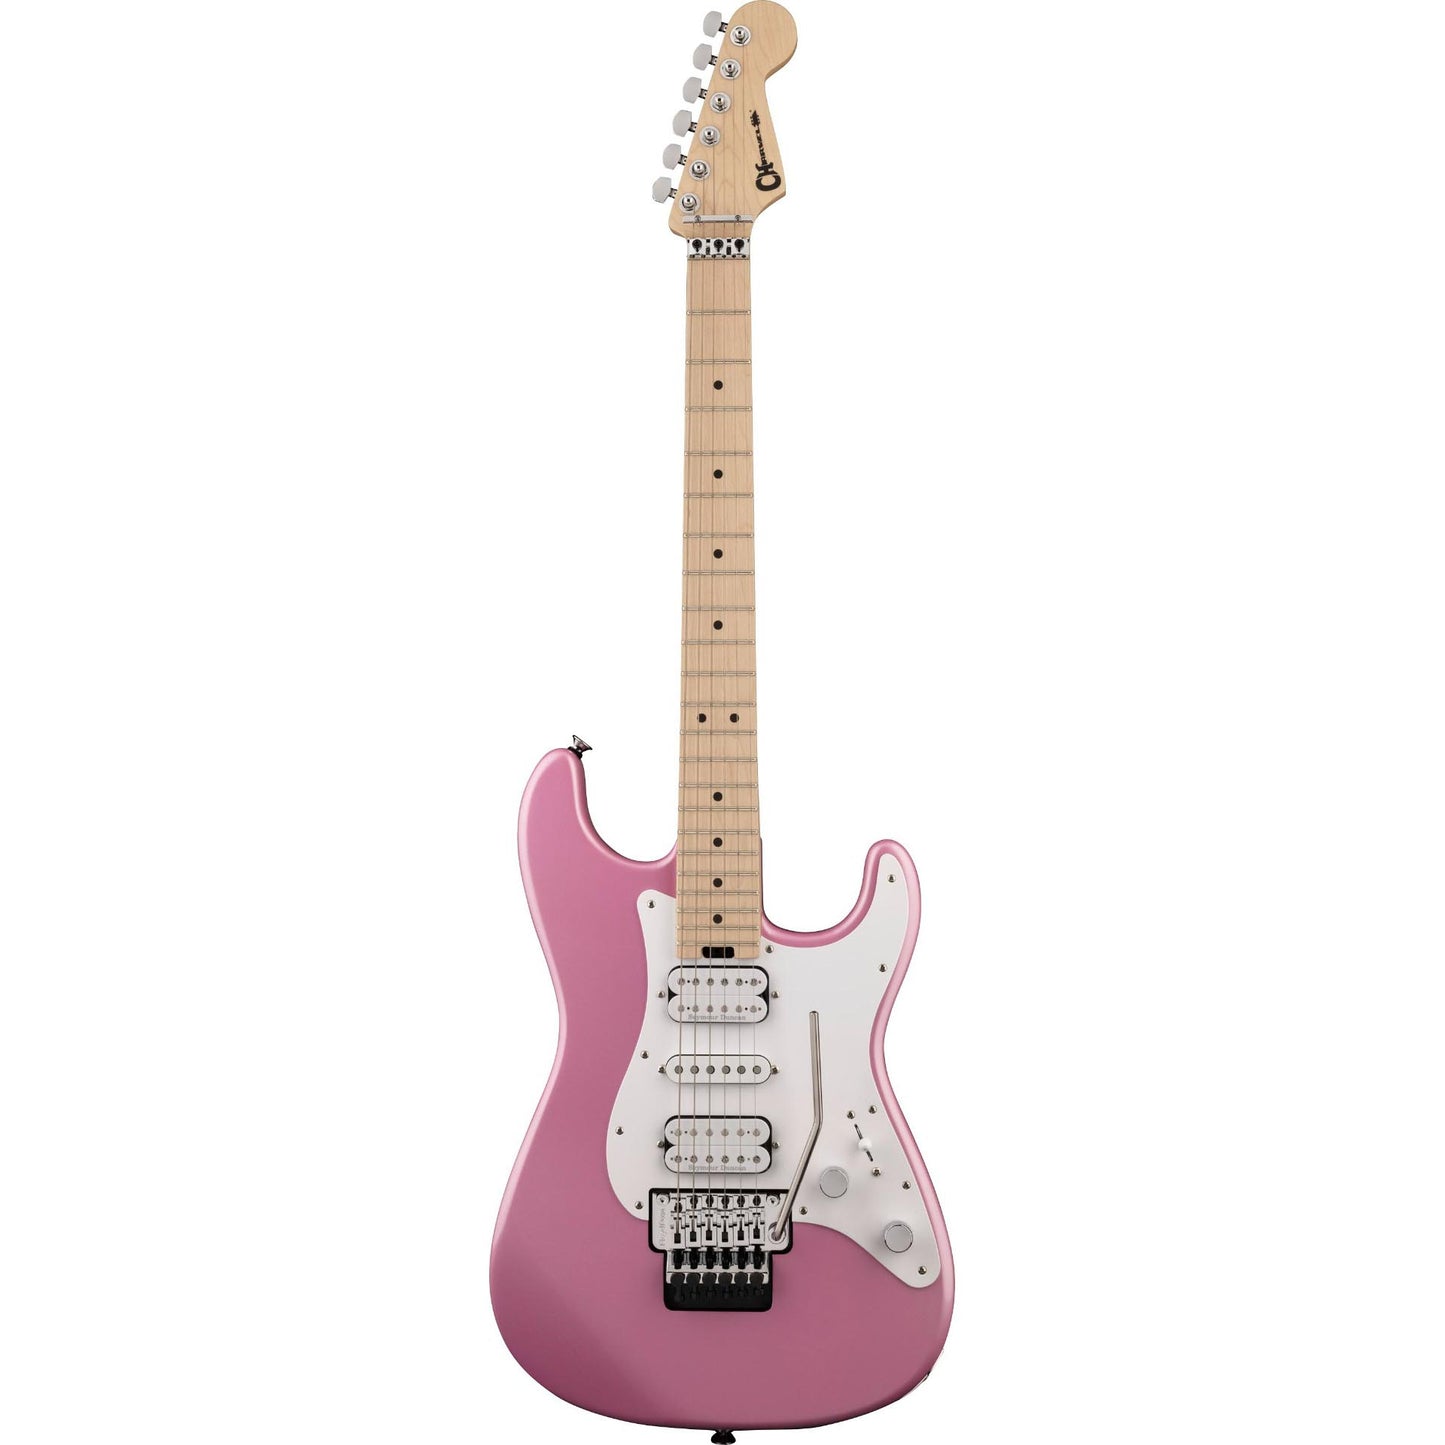 Charvel Pro-Mod So-Cal Electric Guitar - Platinum Pink